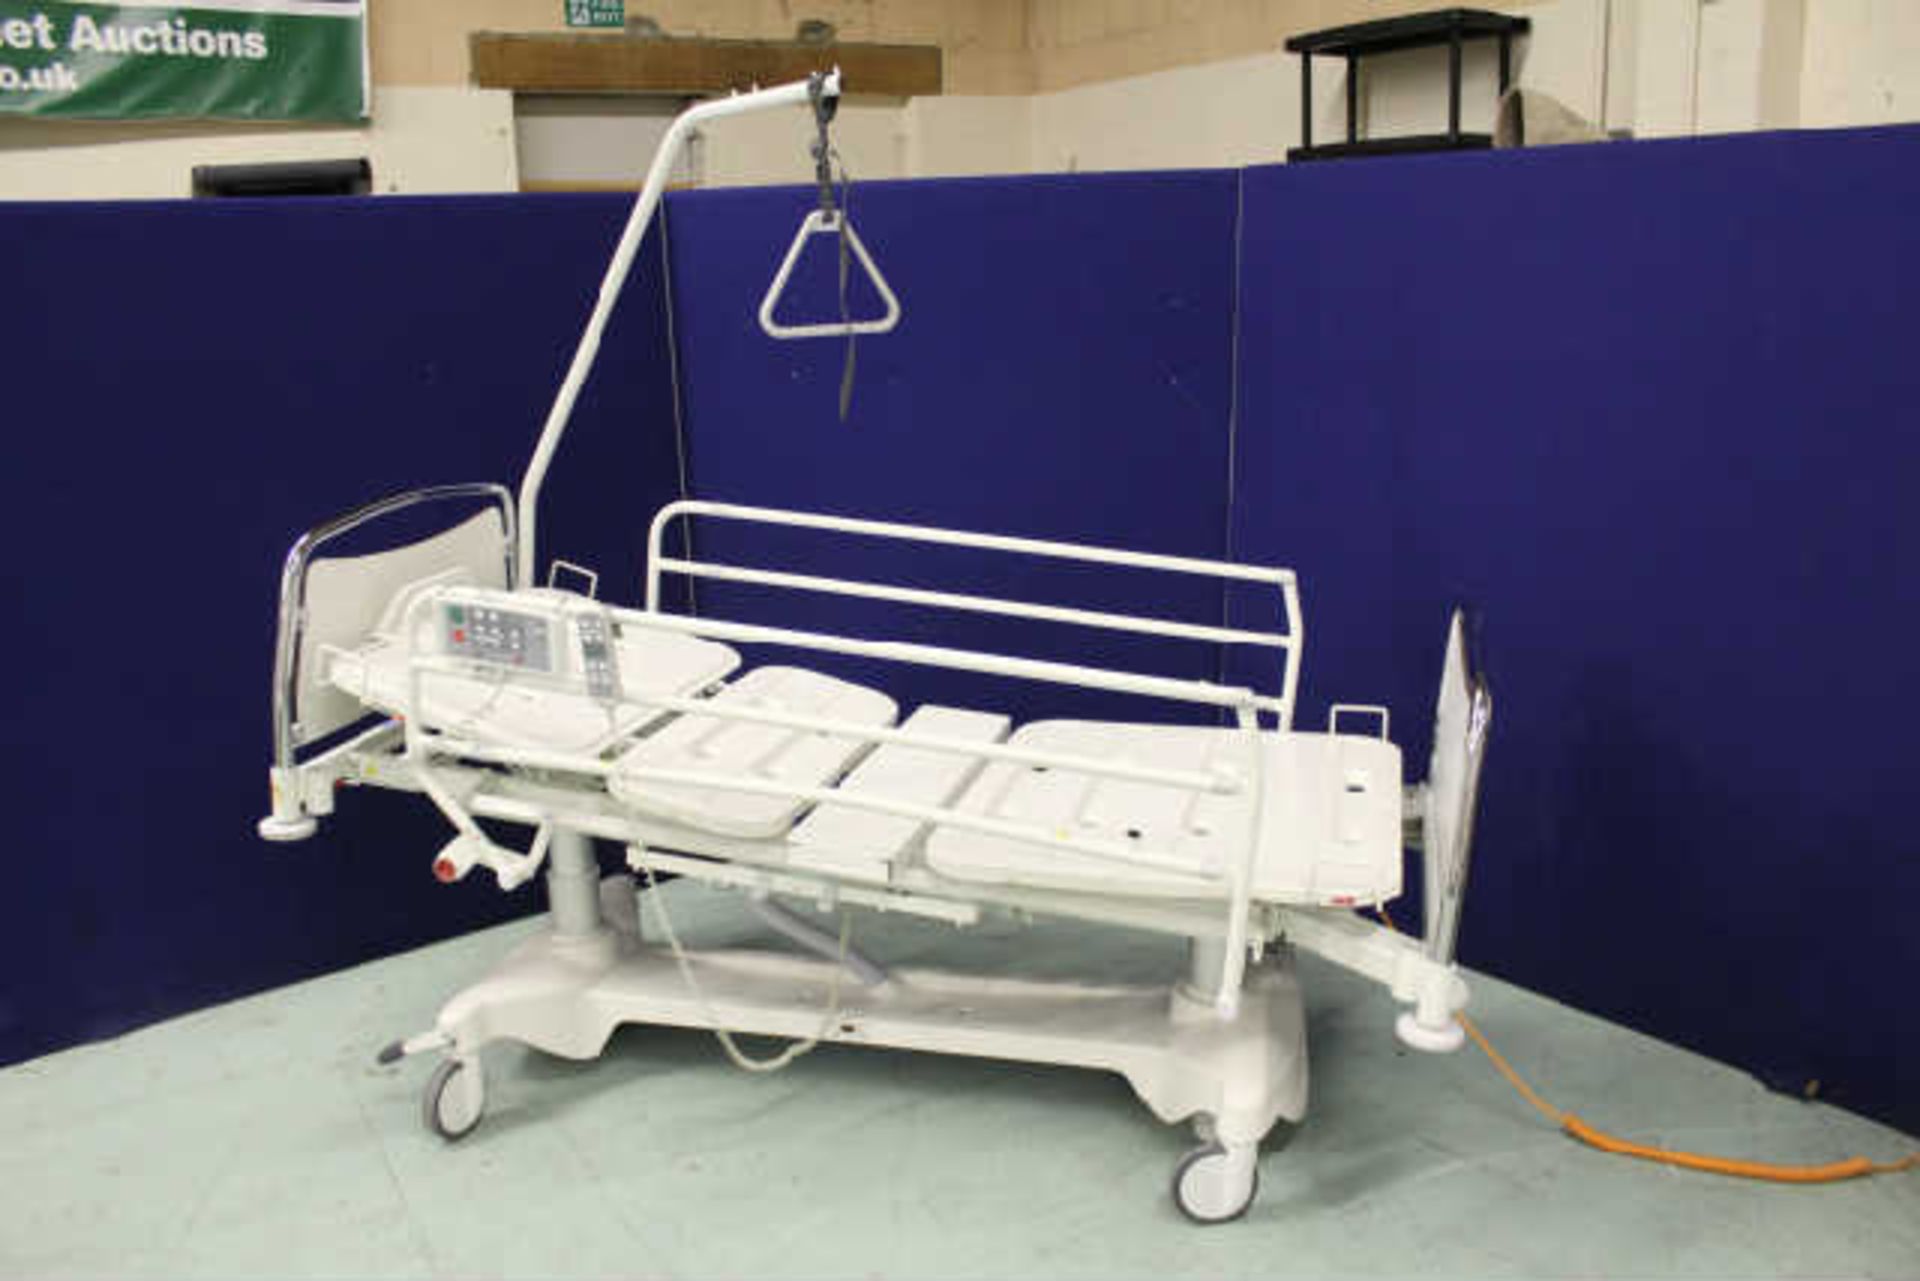 ELEGANZA STANDARD 3000 CPR ADJUSTABLE ELECTRICAL HOSPITAL BED WITH STANDARD 110V INDUSTRIAL PLUG AND